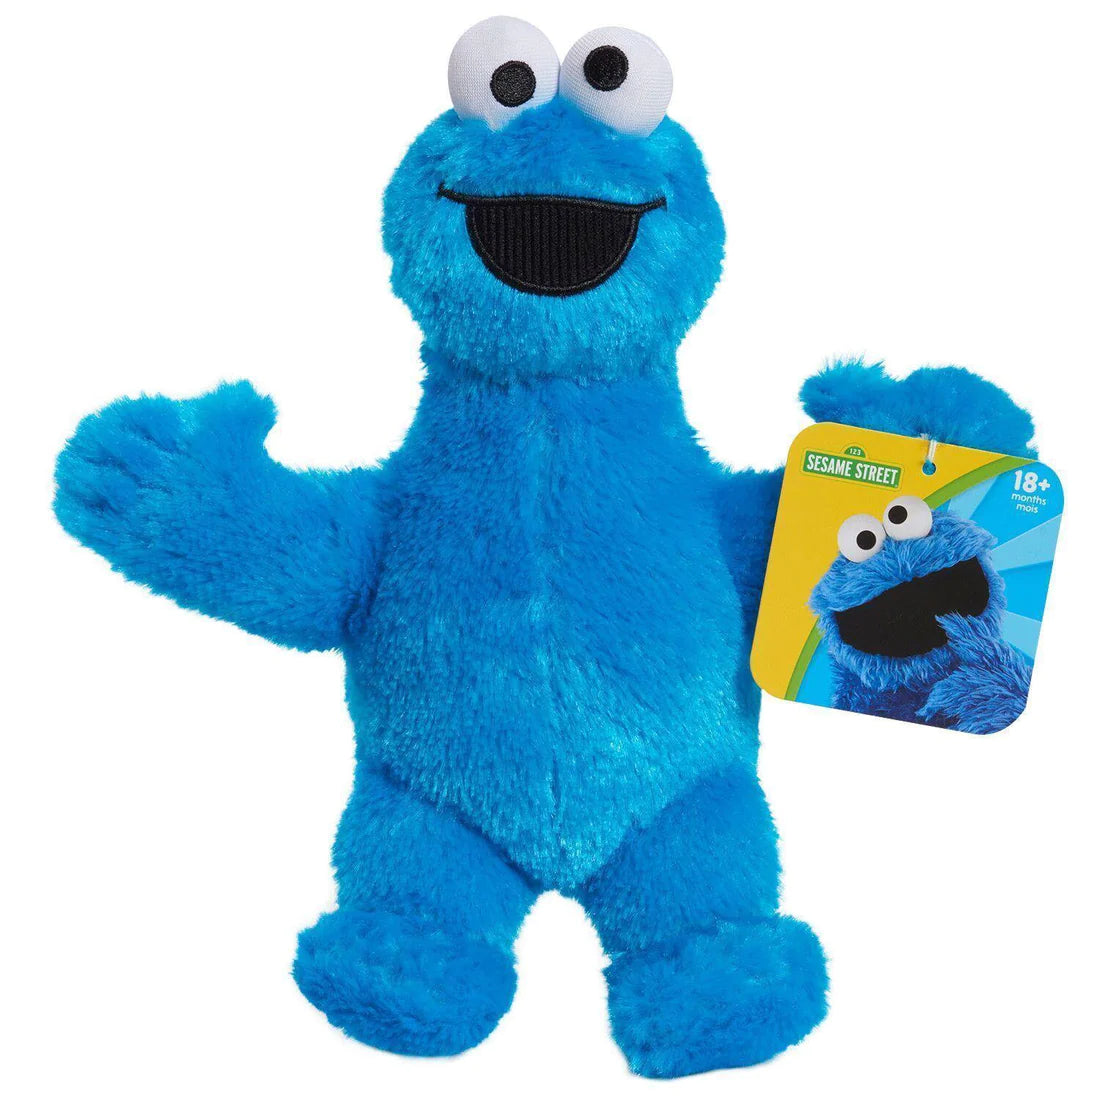 Sesame Street Friends Plush Soft Toy - cookie monster